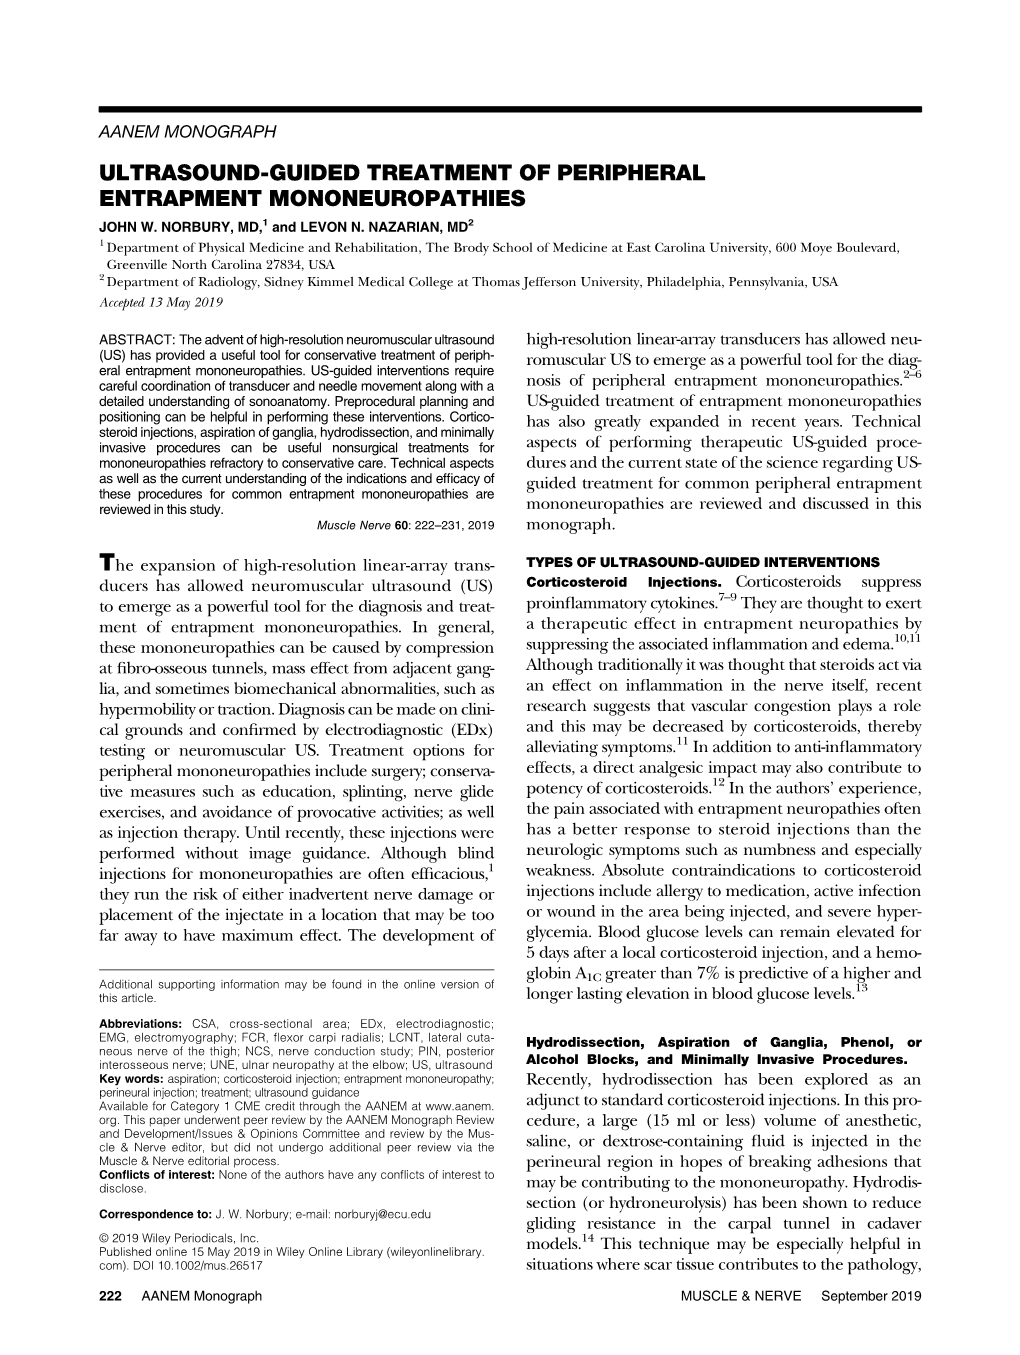 Ultrasound-Guided Treatment of Peripheral Entrapment Mononeuropathies John W